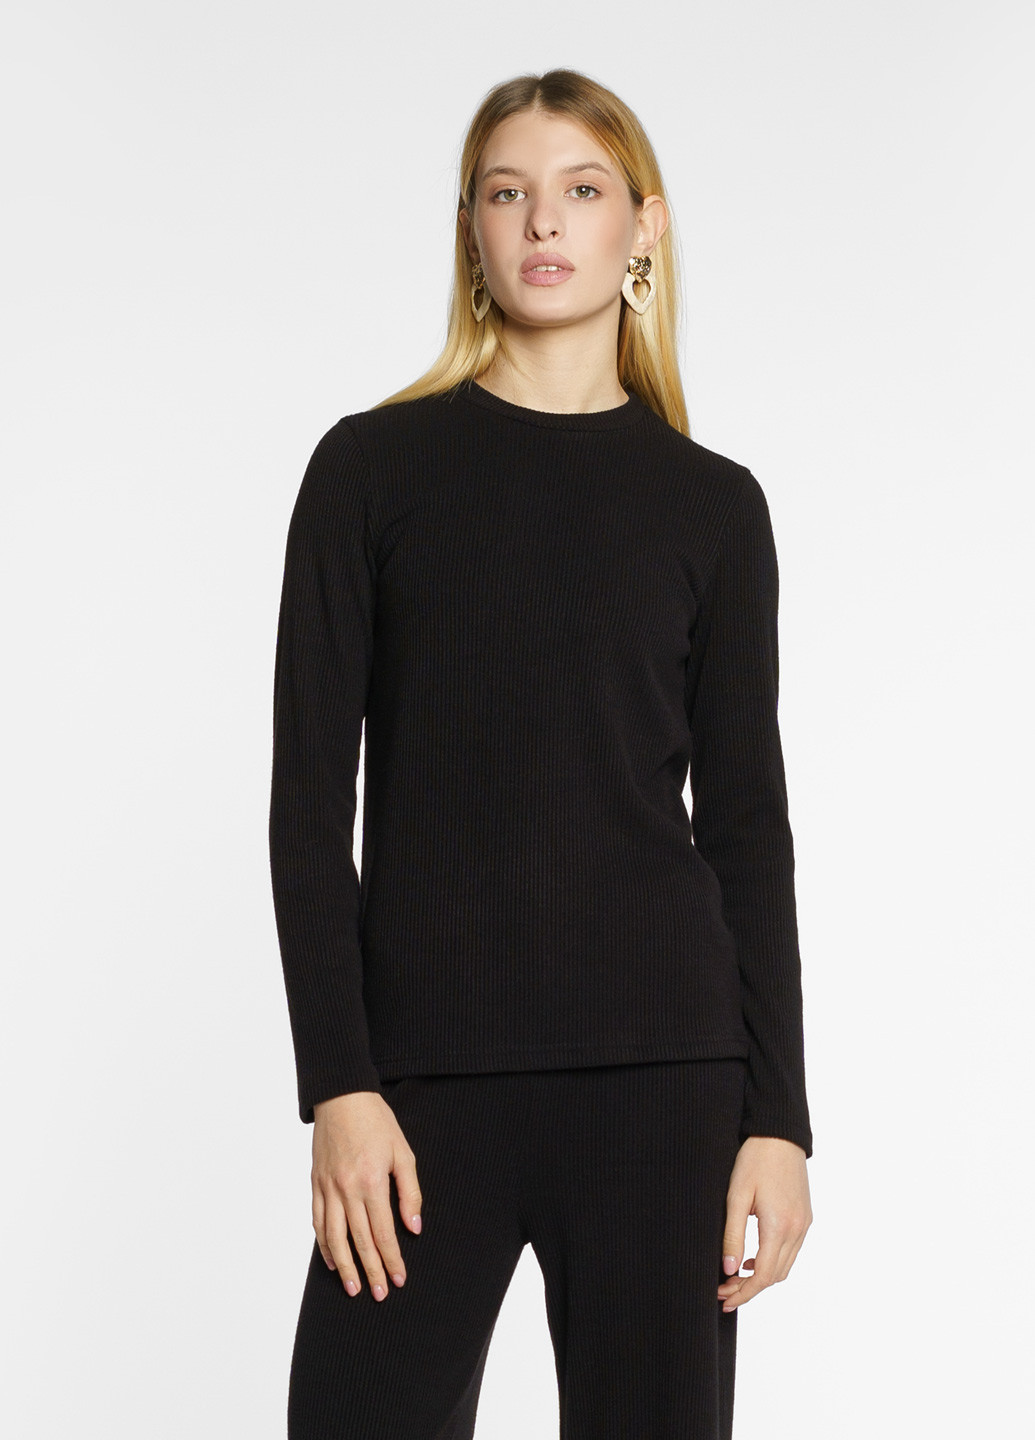 Чорна всесезон футболка жіноча чорна Arber Long sleeve jersey W